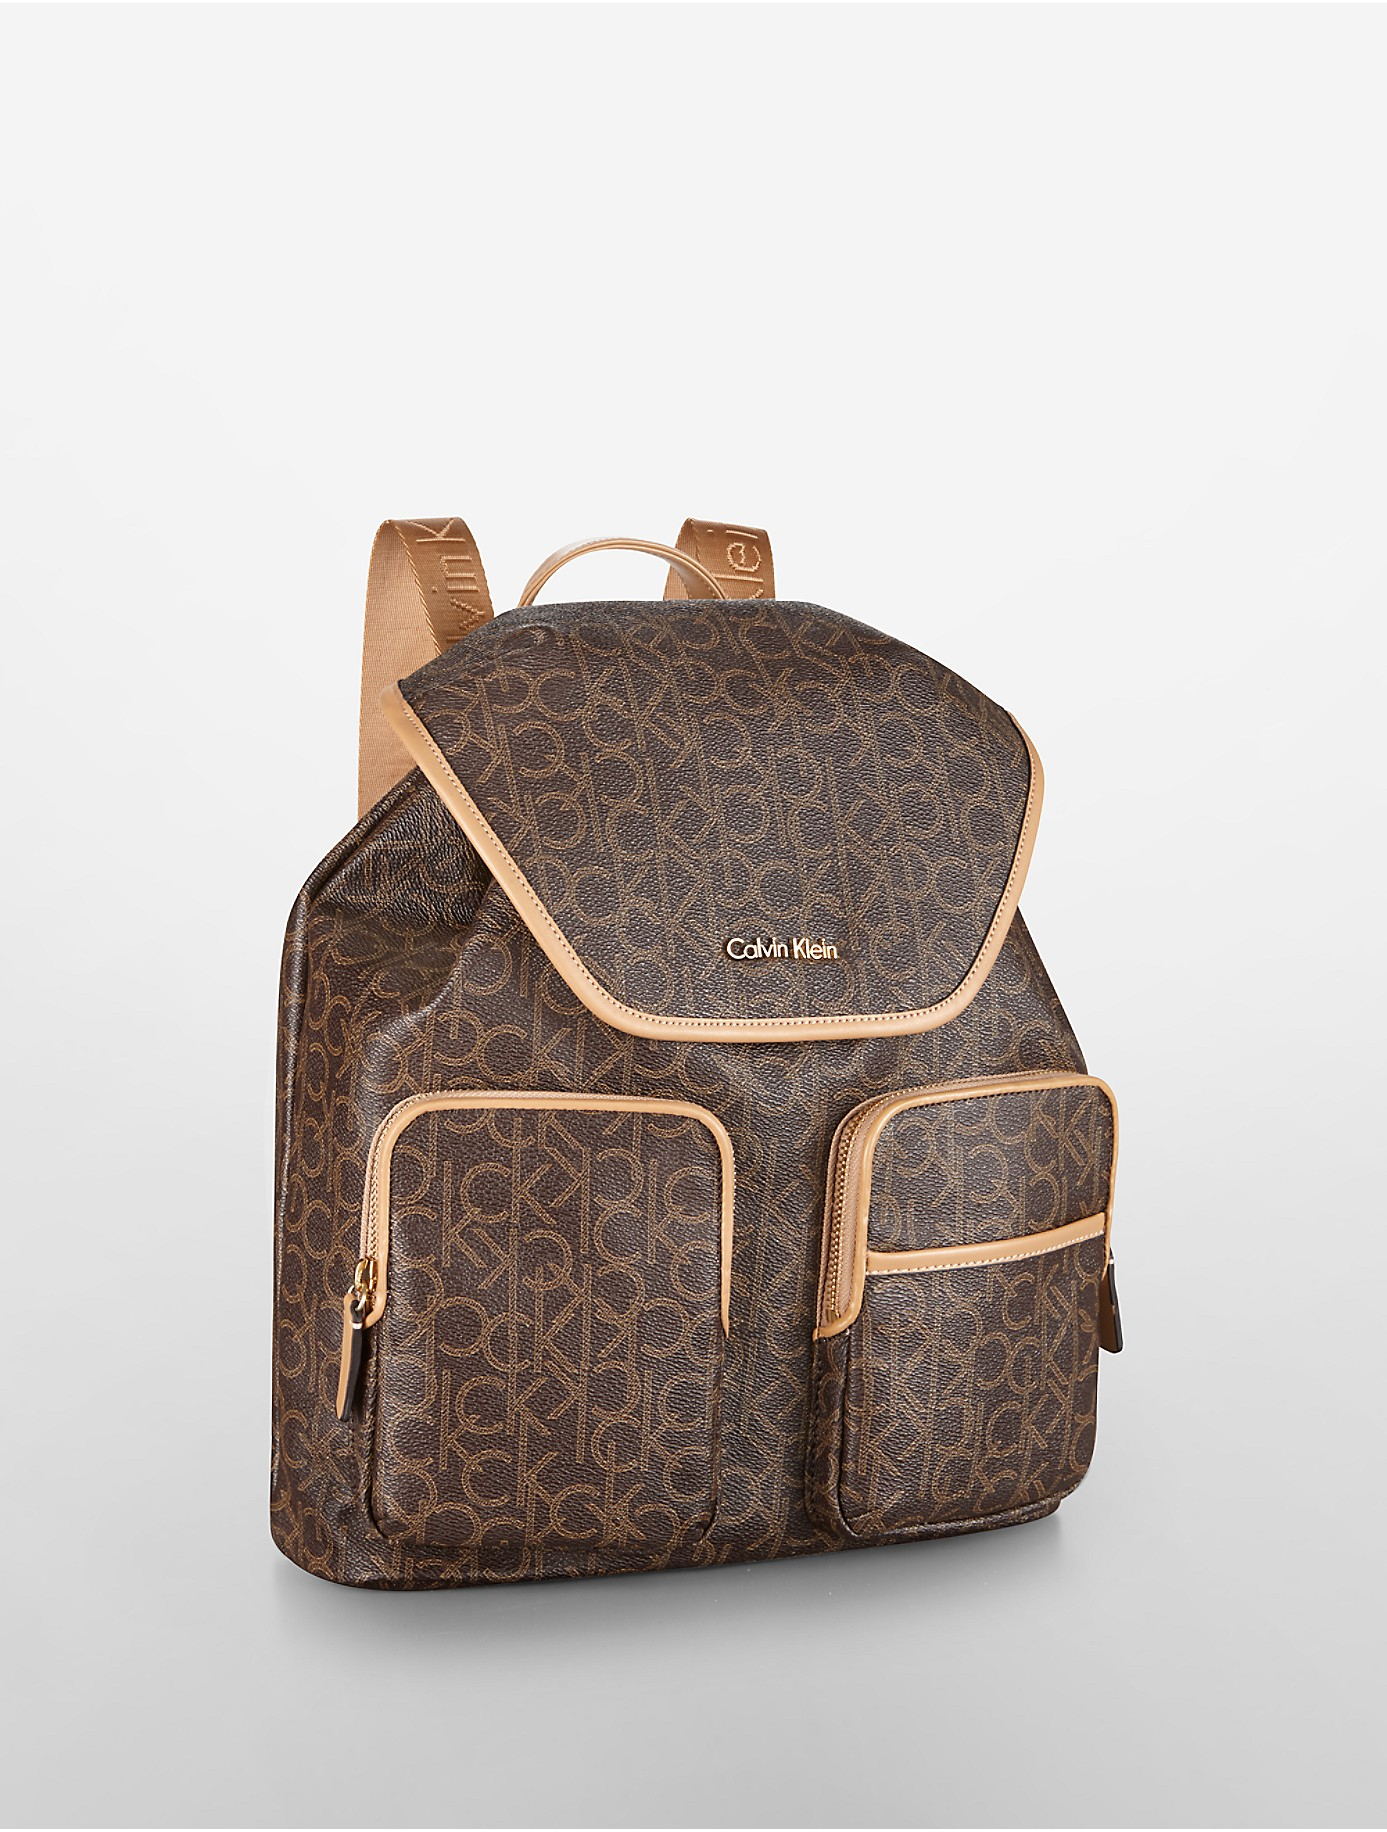 Calvin Klein Hudson Logo Leather Backpack in Brown - Lyst